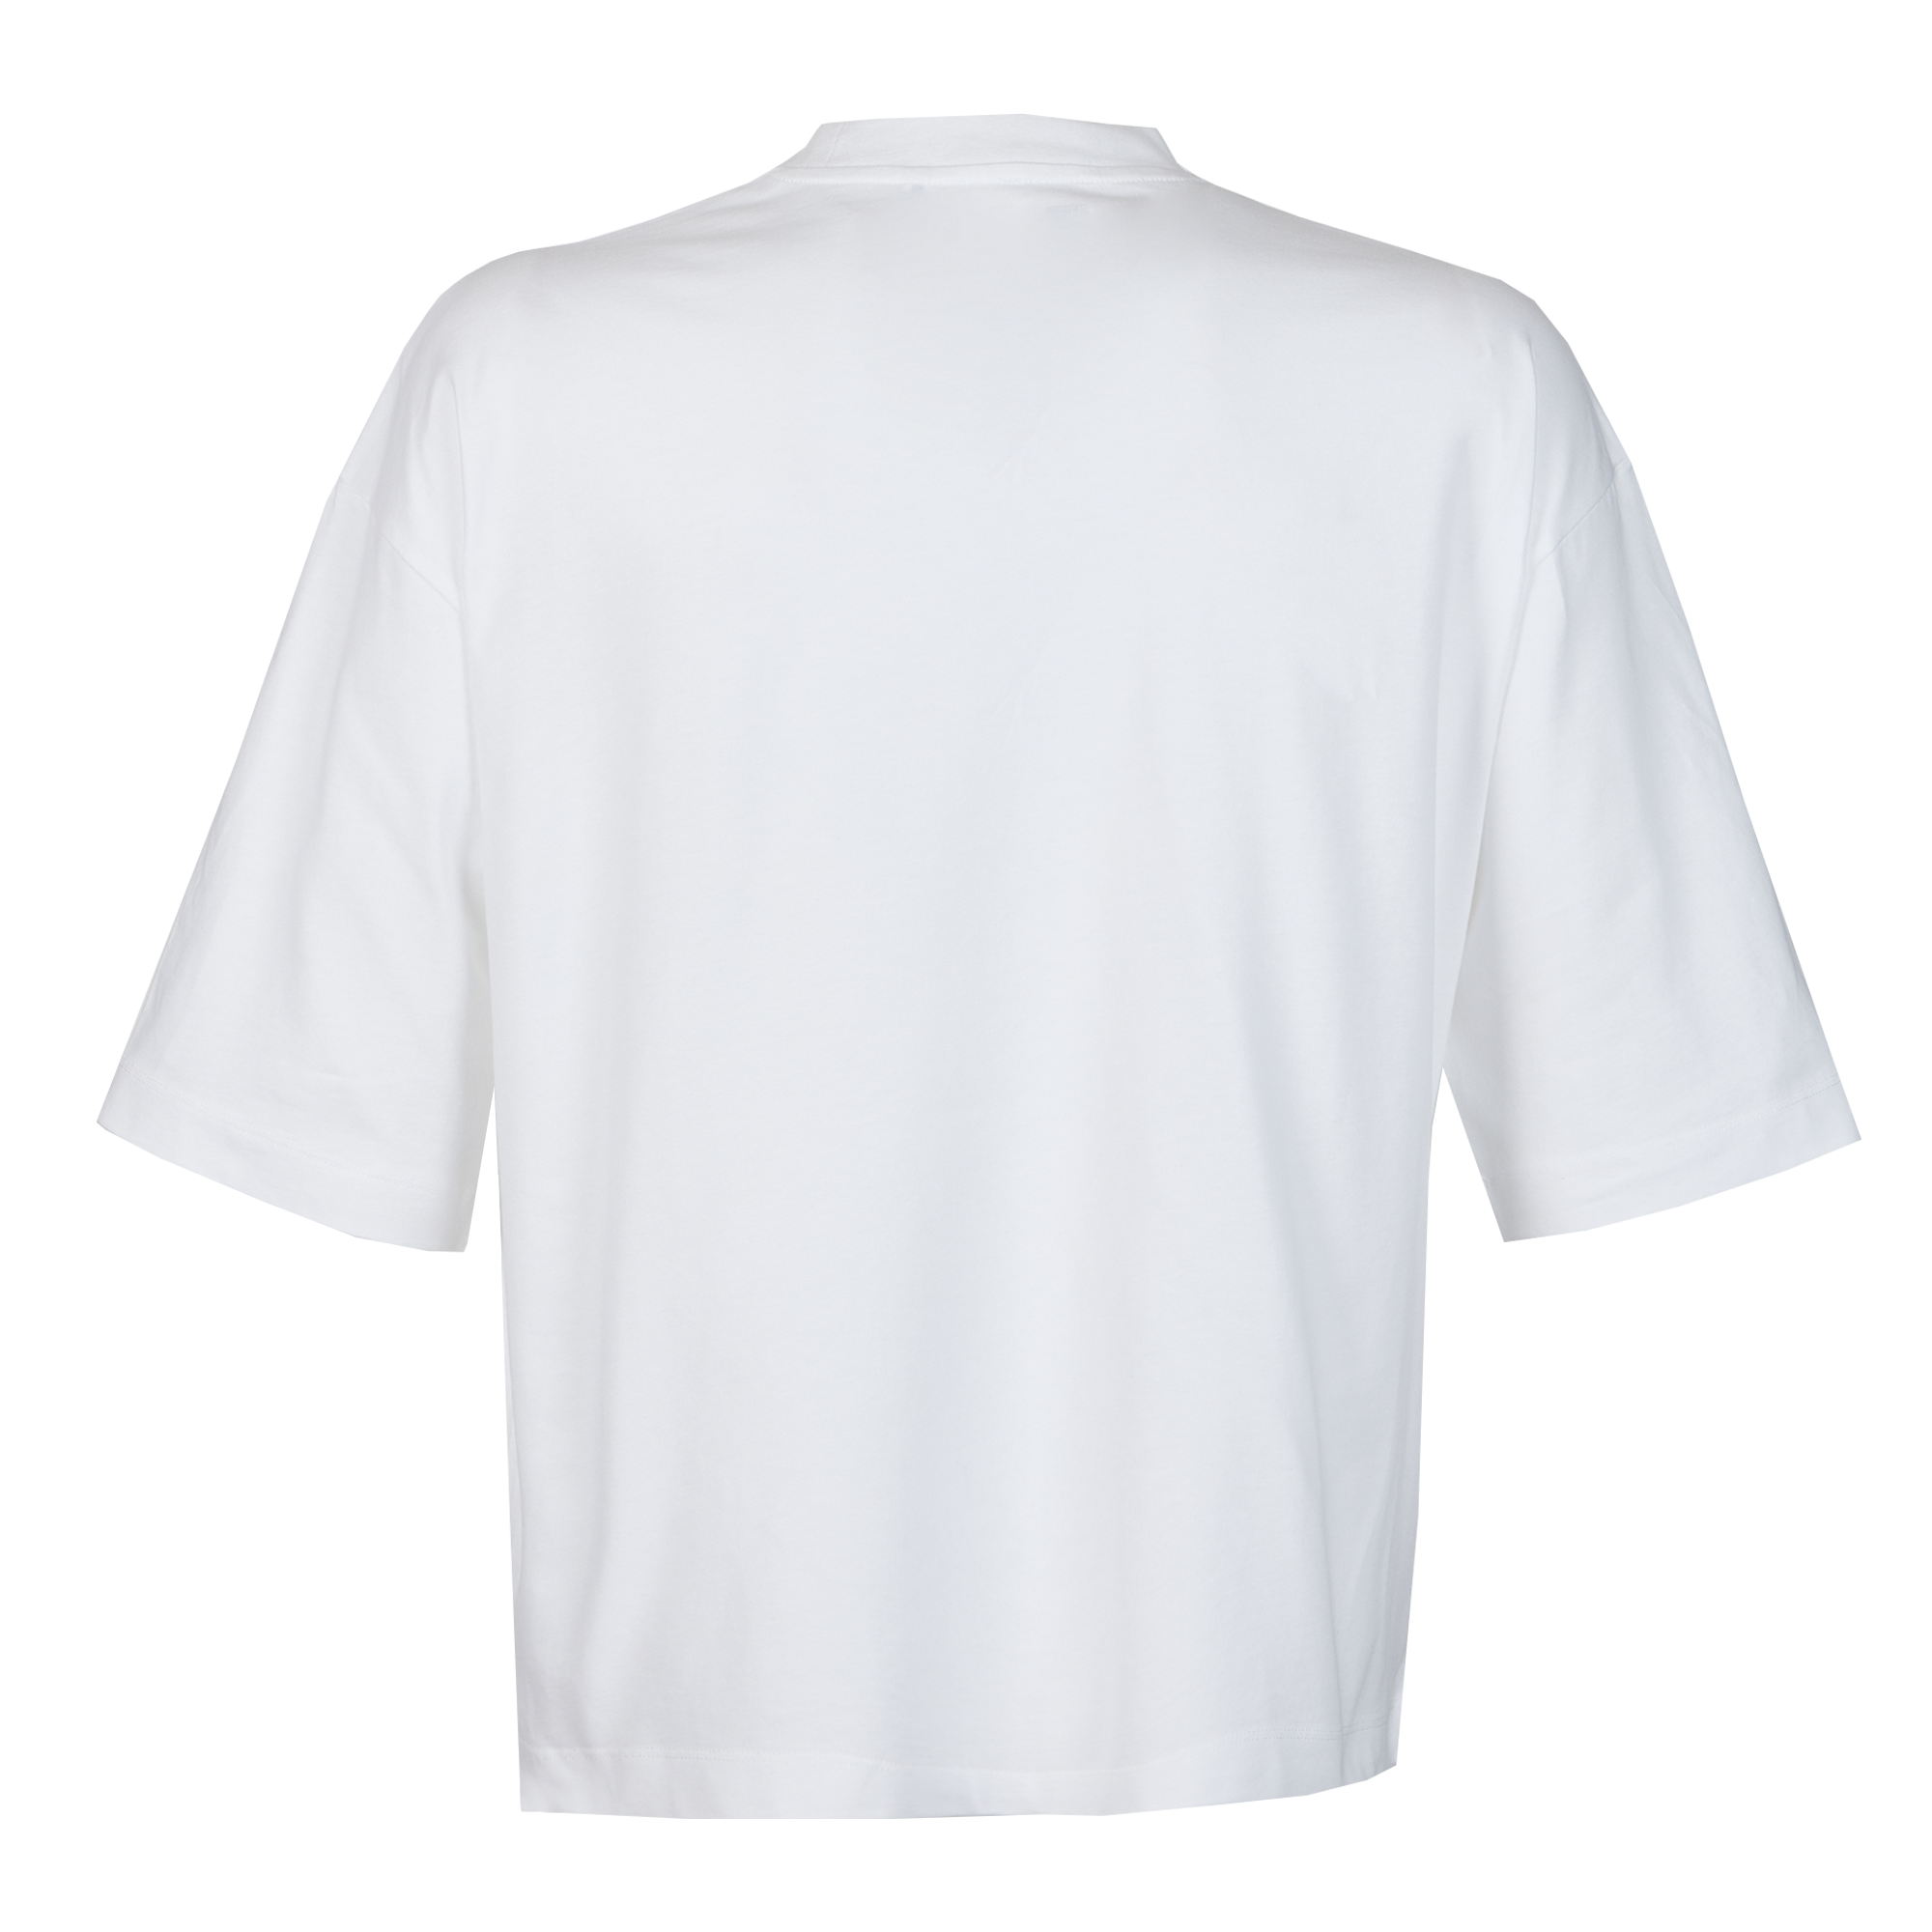 Bora Bora Loose T-Shirt  - White